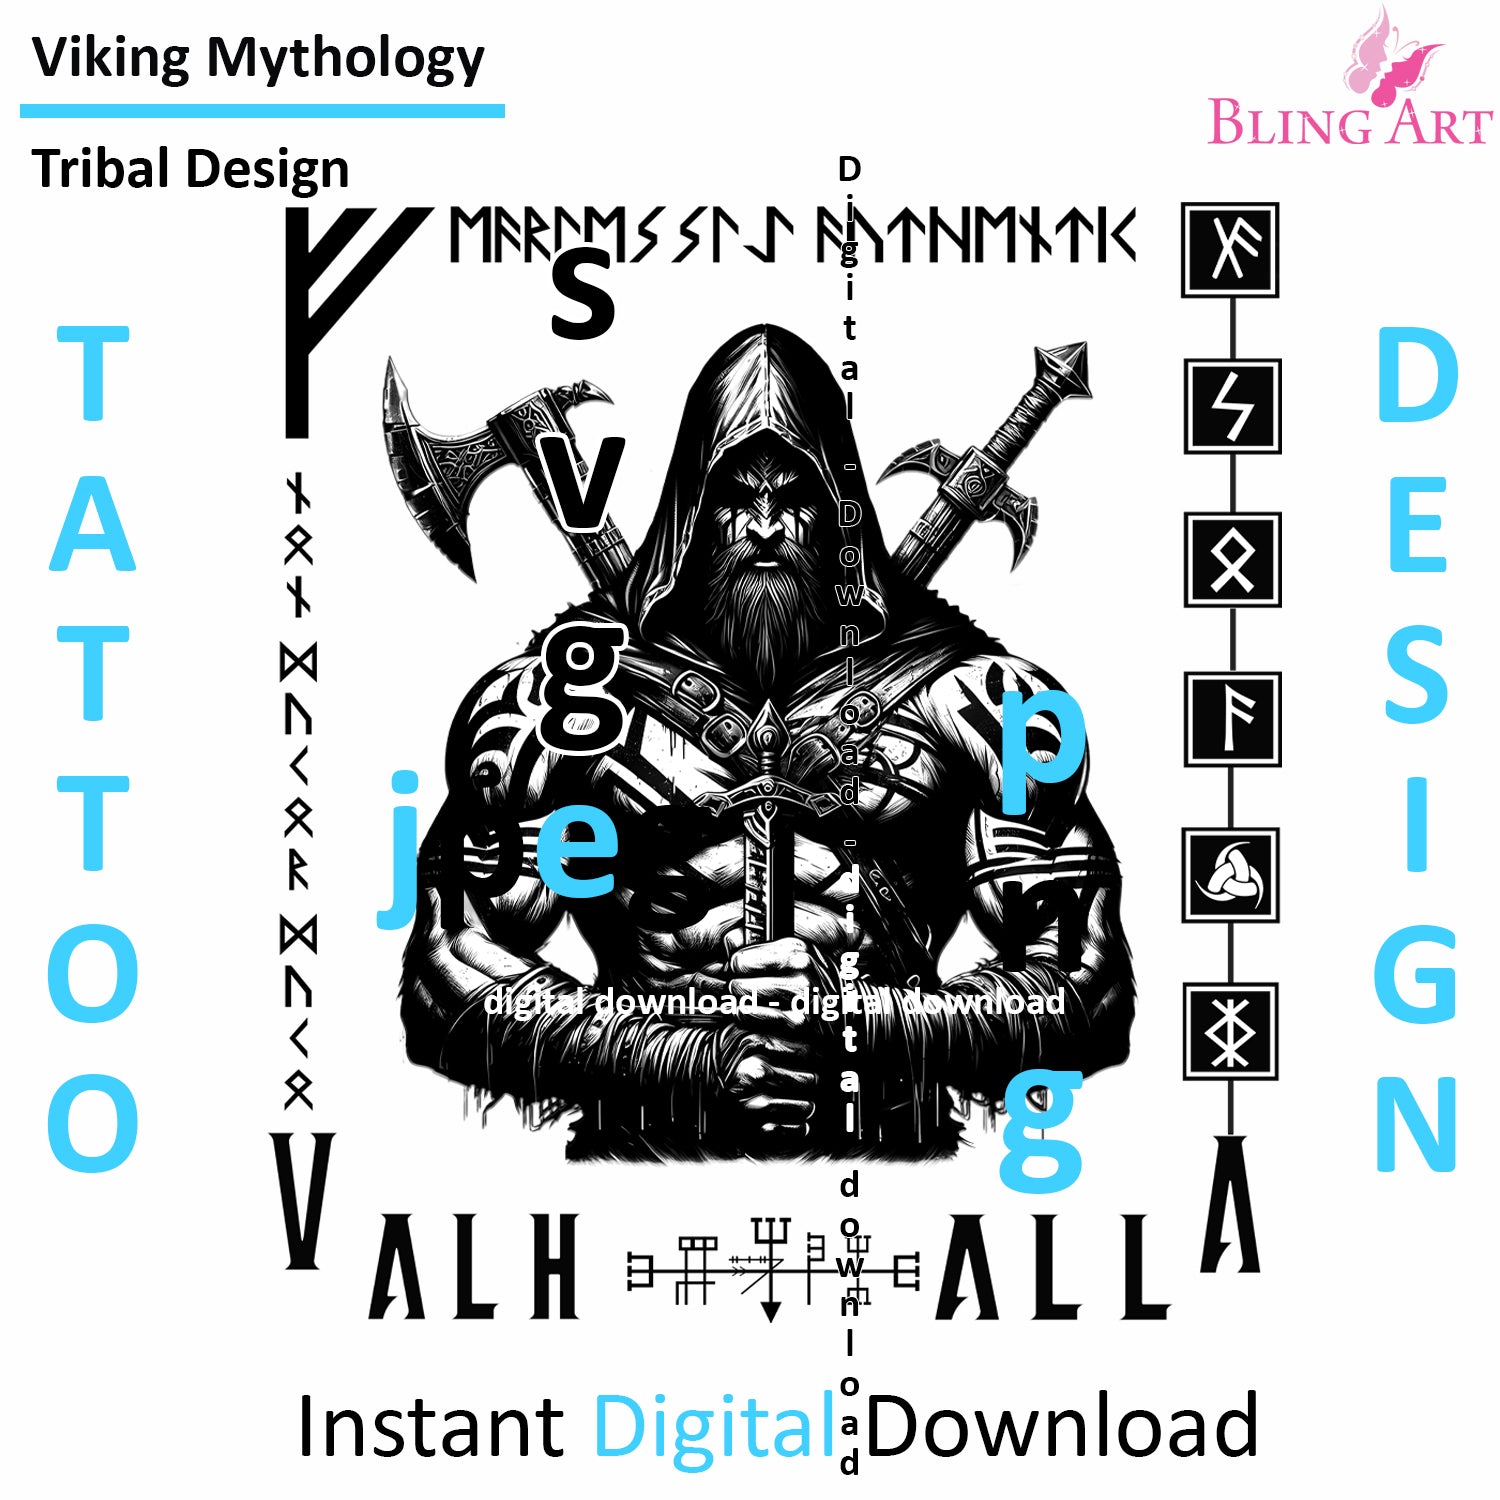 Viking Leader - Digital Design (PNG, JPEG, SVG) - Instant Download for Tattoos, T-Shirts, Wall Art